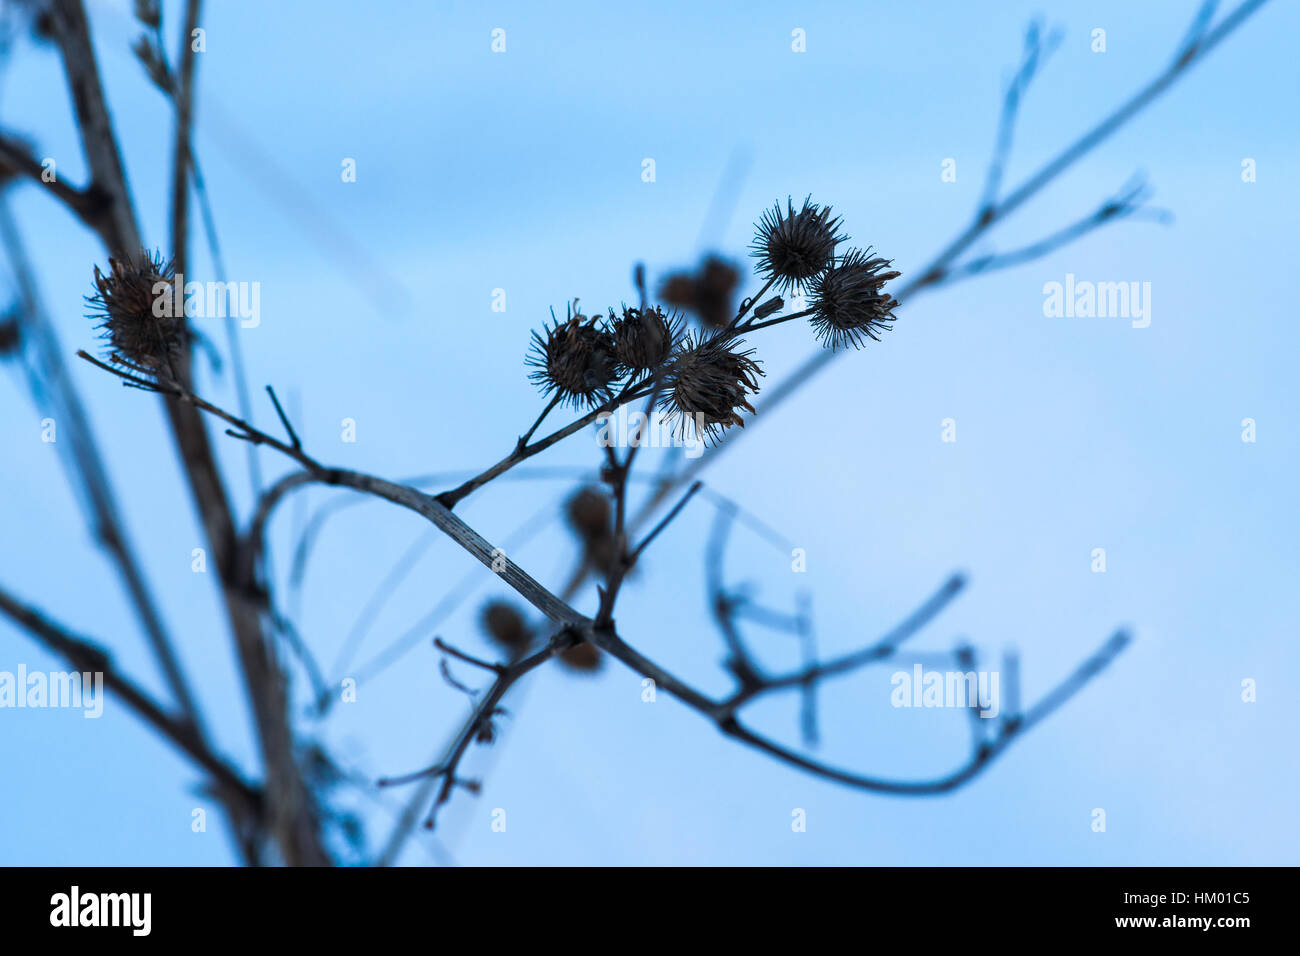 Dry common burdock shrub against soft blue background of winter evening Stock Photo